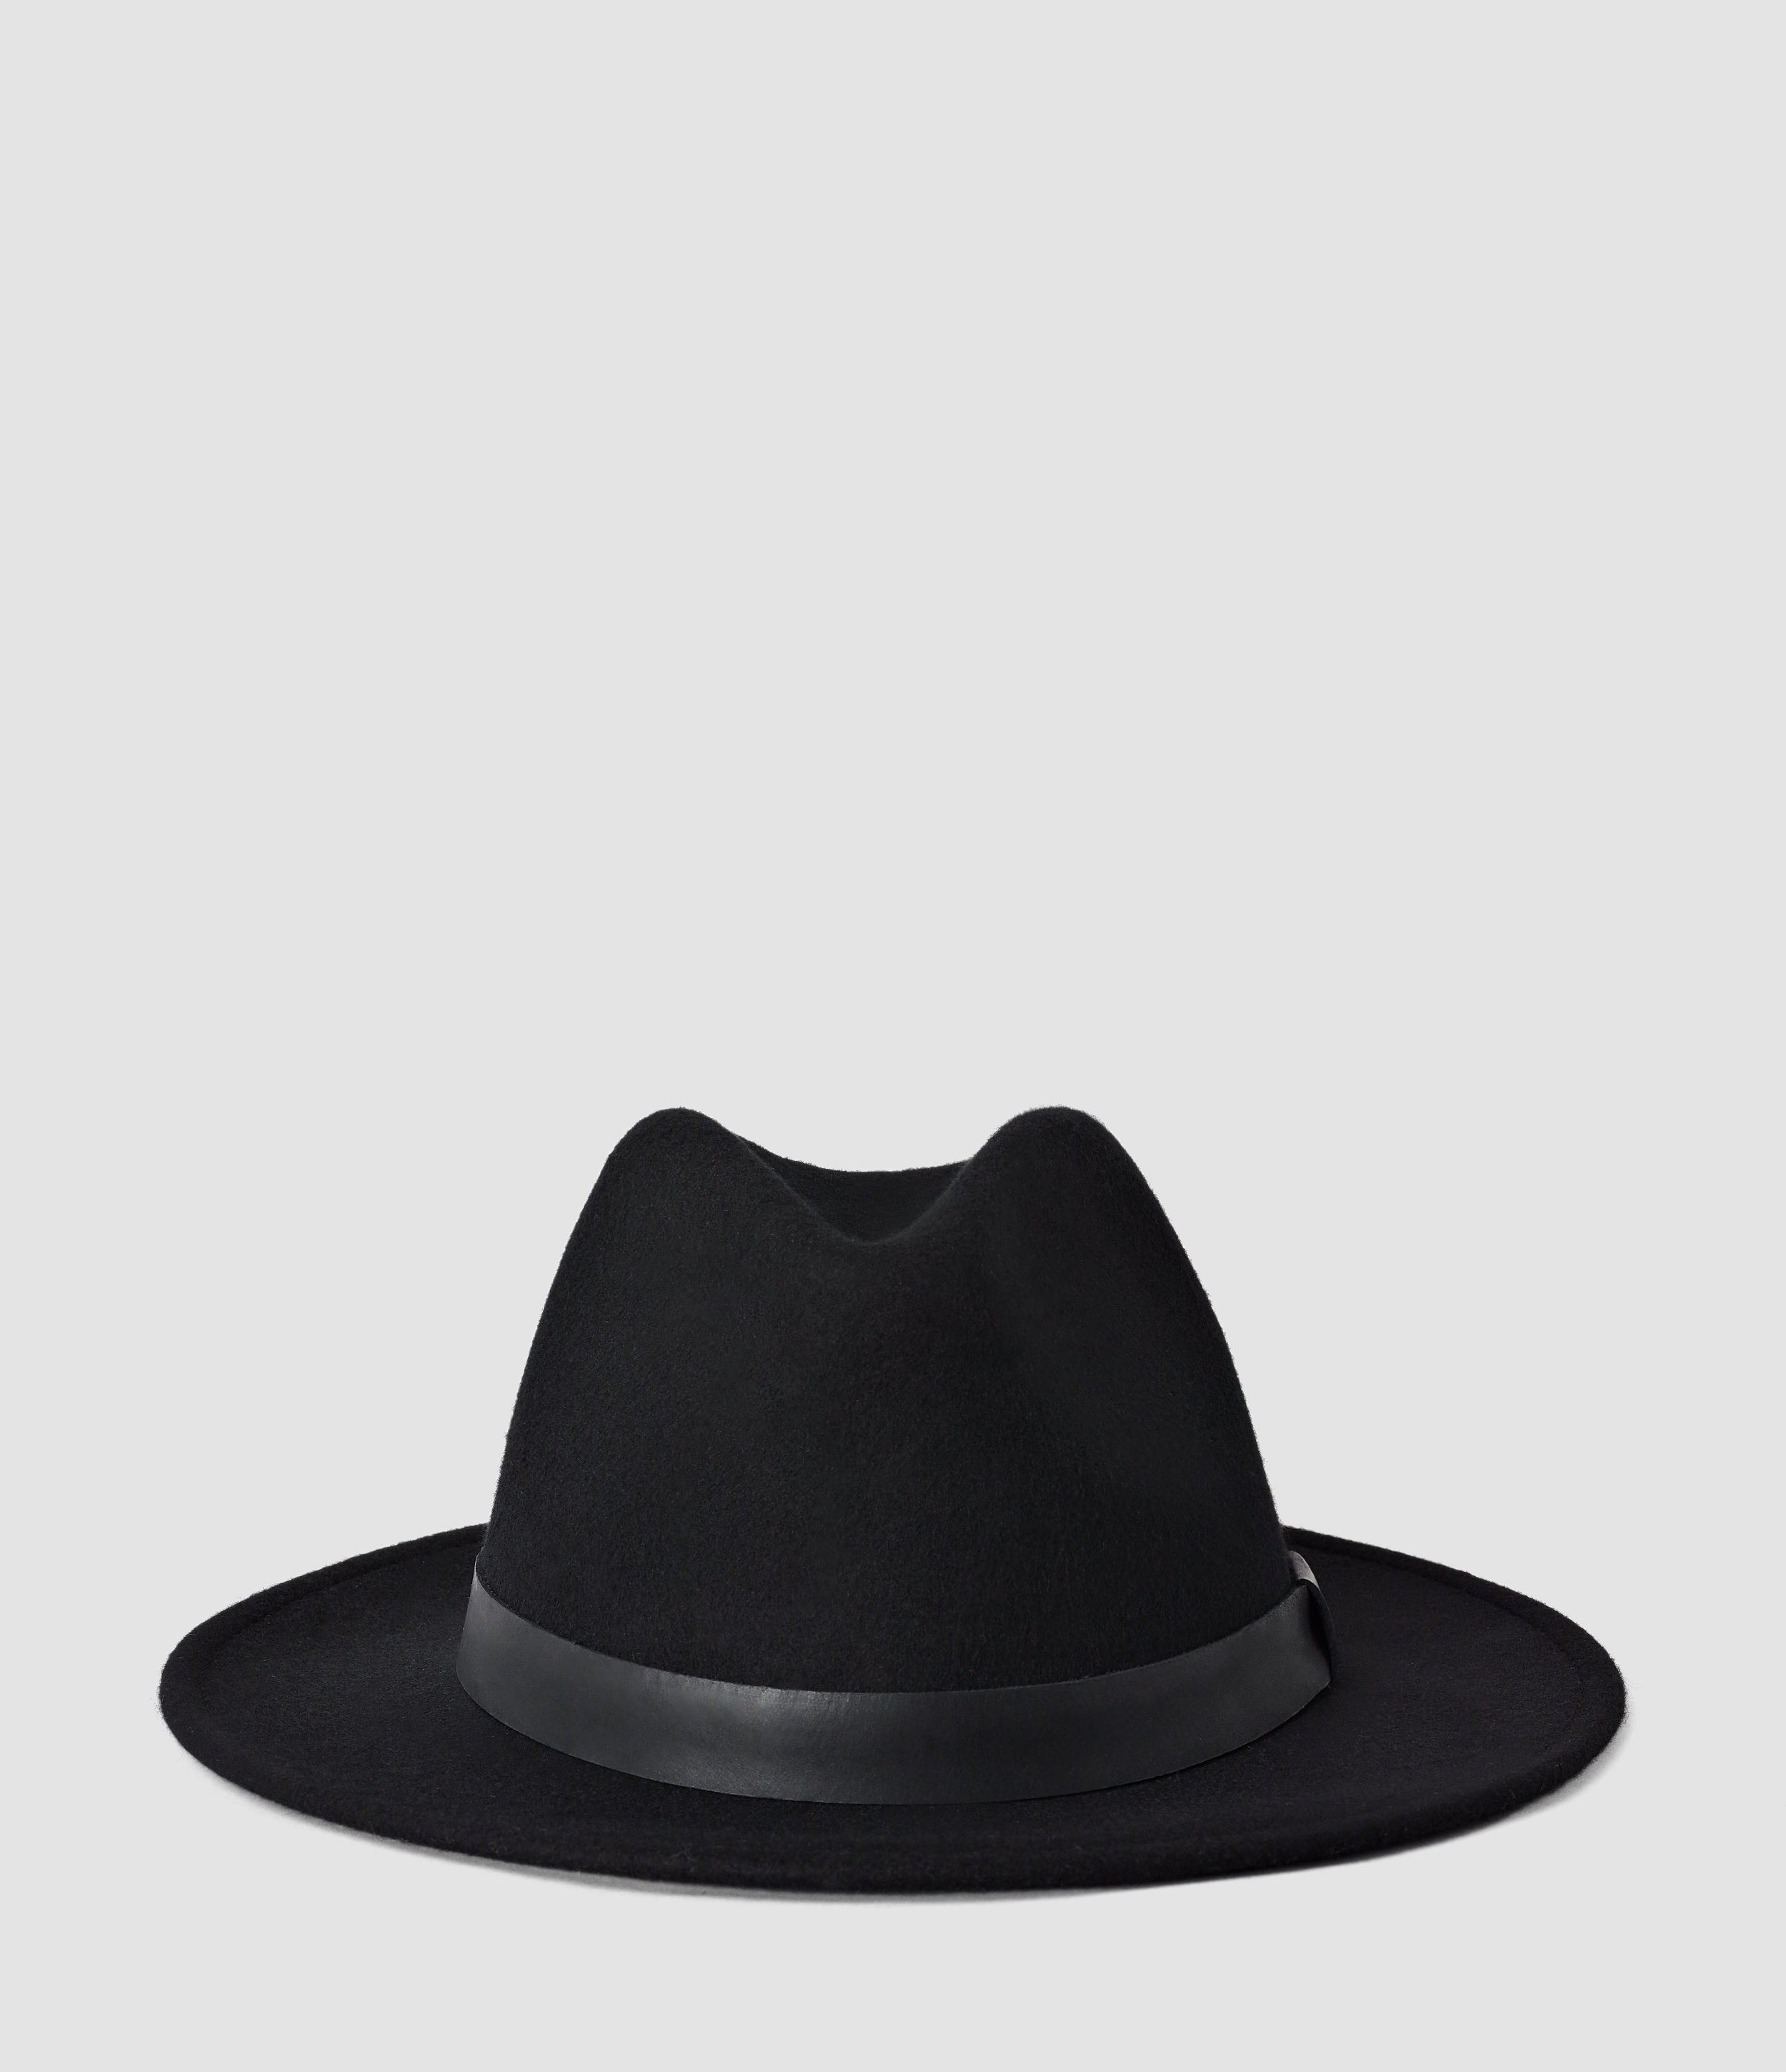 AllSaints Bronson Leather Fedora Hat in Black for Men - Lyst